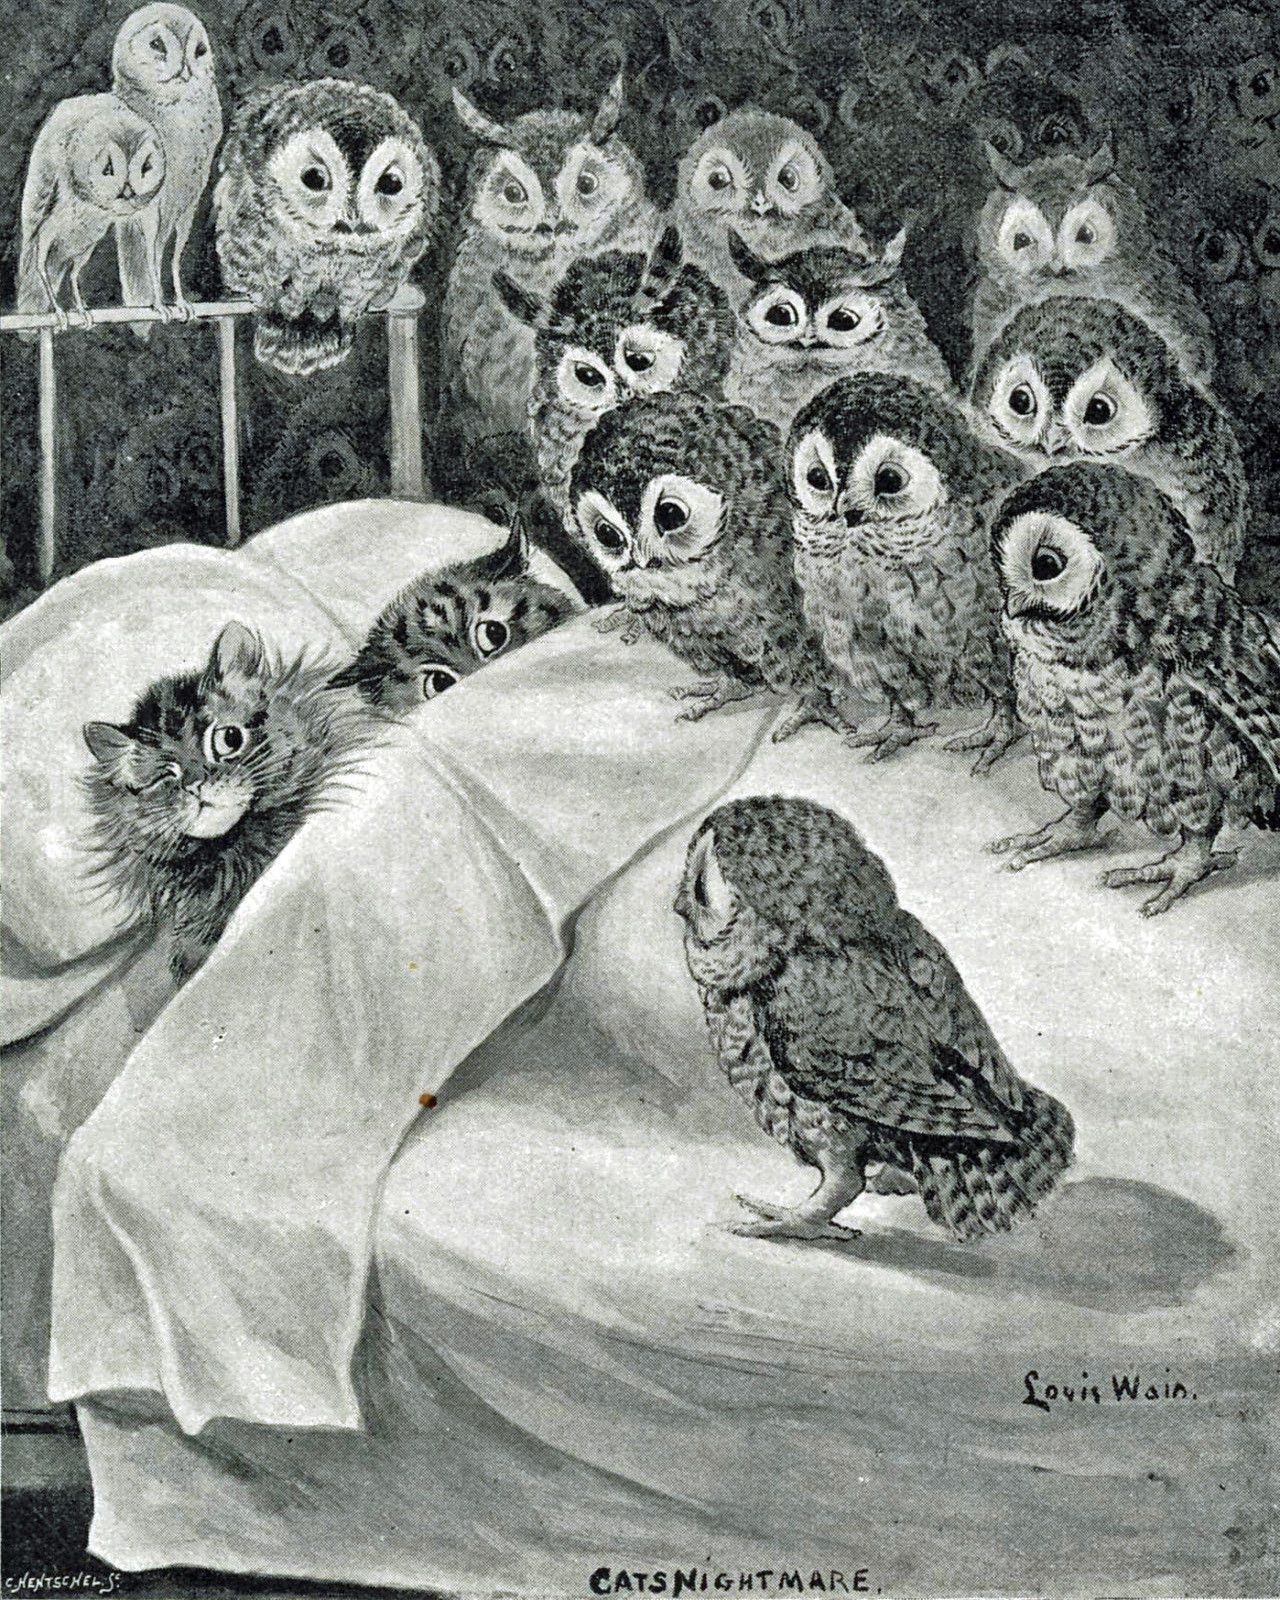 Kattennachtmerrie by Louis Wain - 1907 